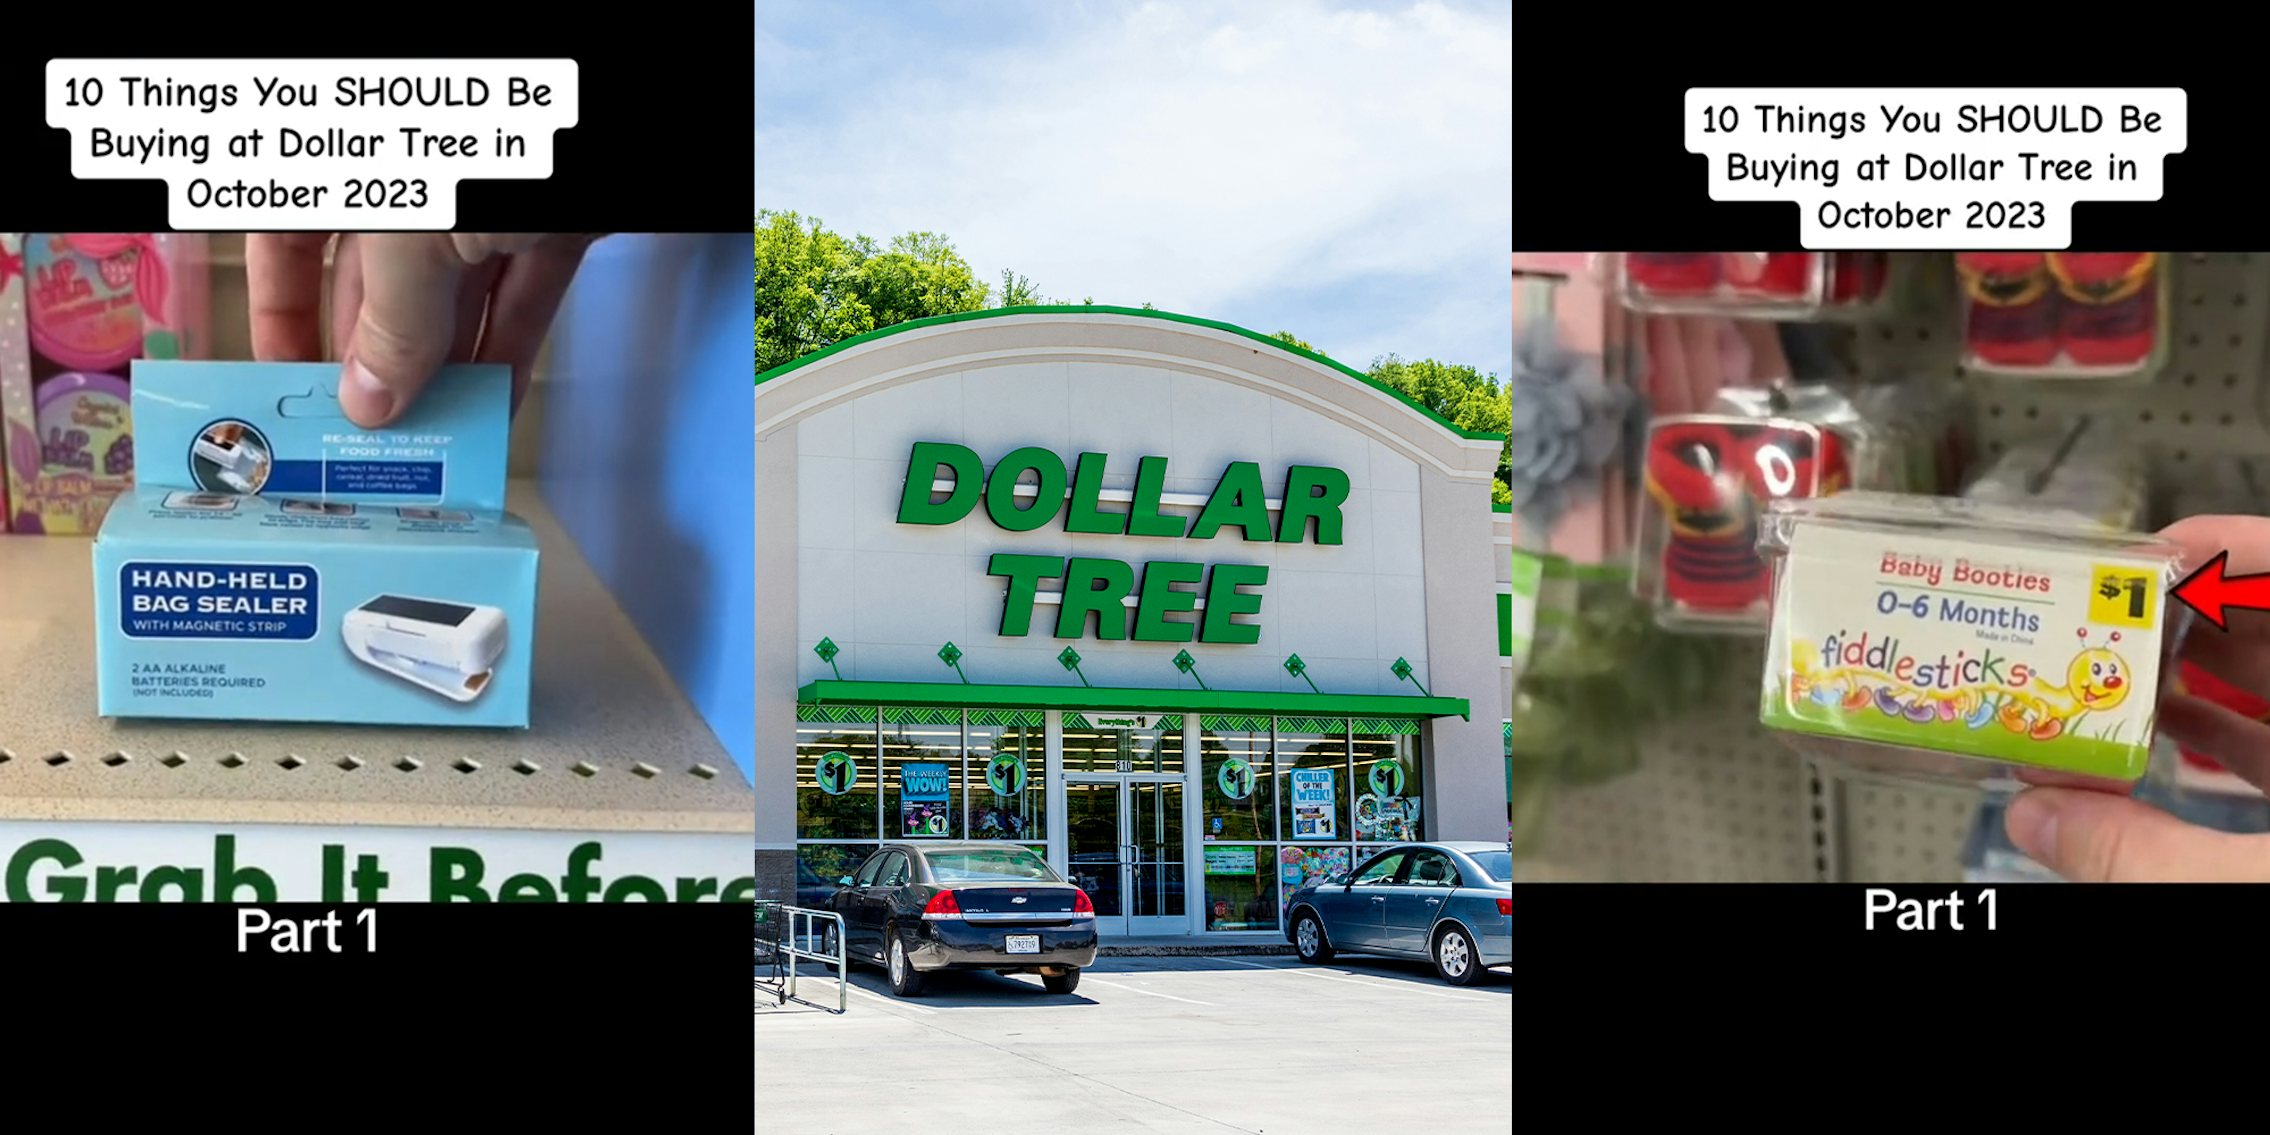 https://uploads.dailydot.com/2023/10/Dollar-Tree-Top-Things-to-Buy.jpg?q=65&auto=format&w=2270&ar=2:1&fit=crop